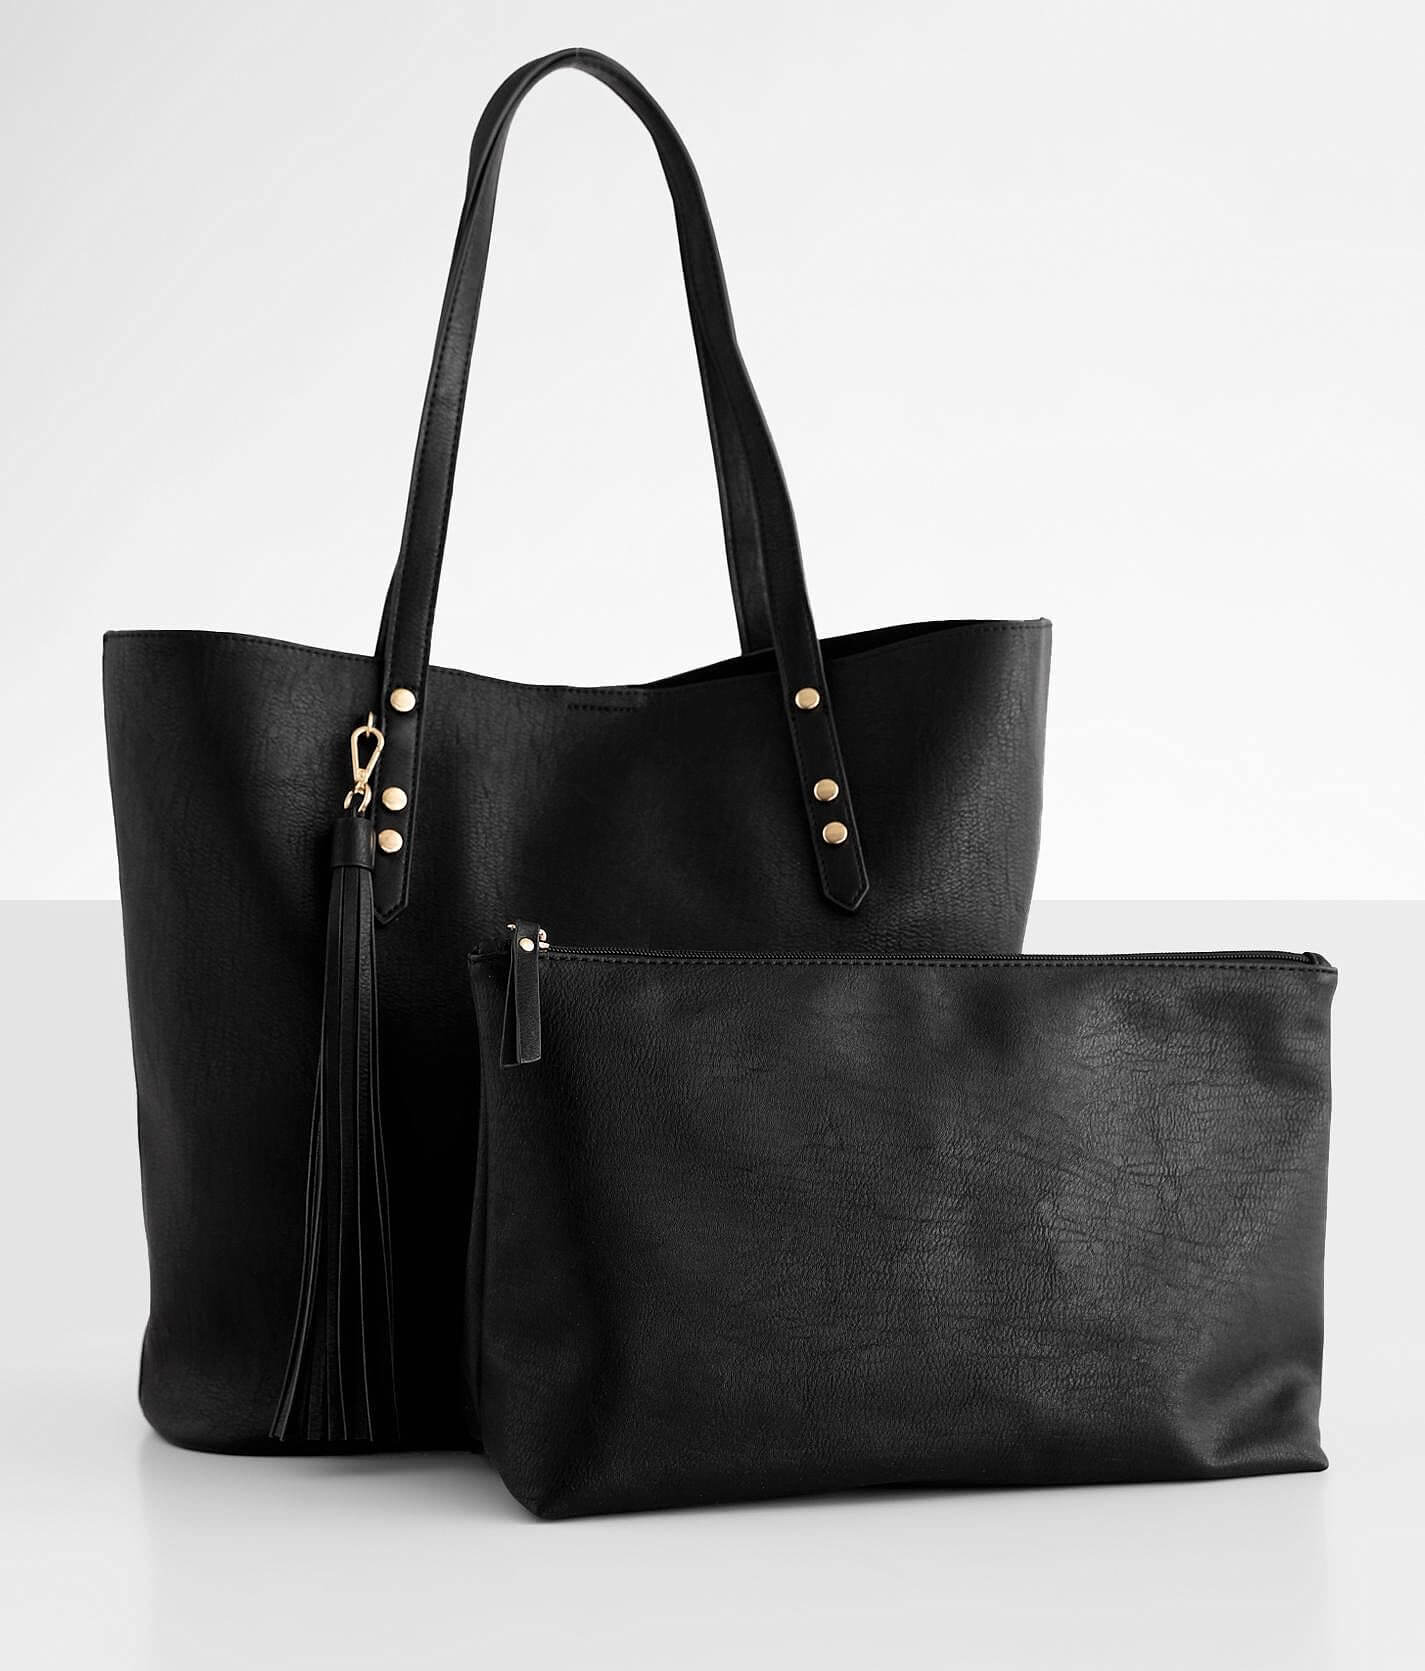 MIZTIQUE Tote Bag Women's Black/Gray/Multi Vegan Leather - $24 - From Trish